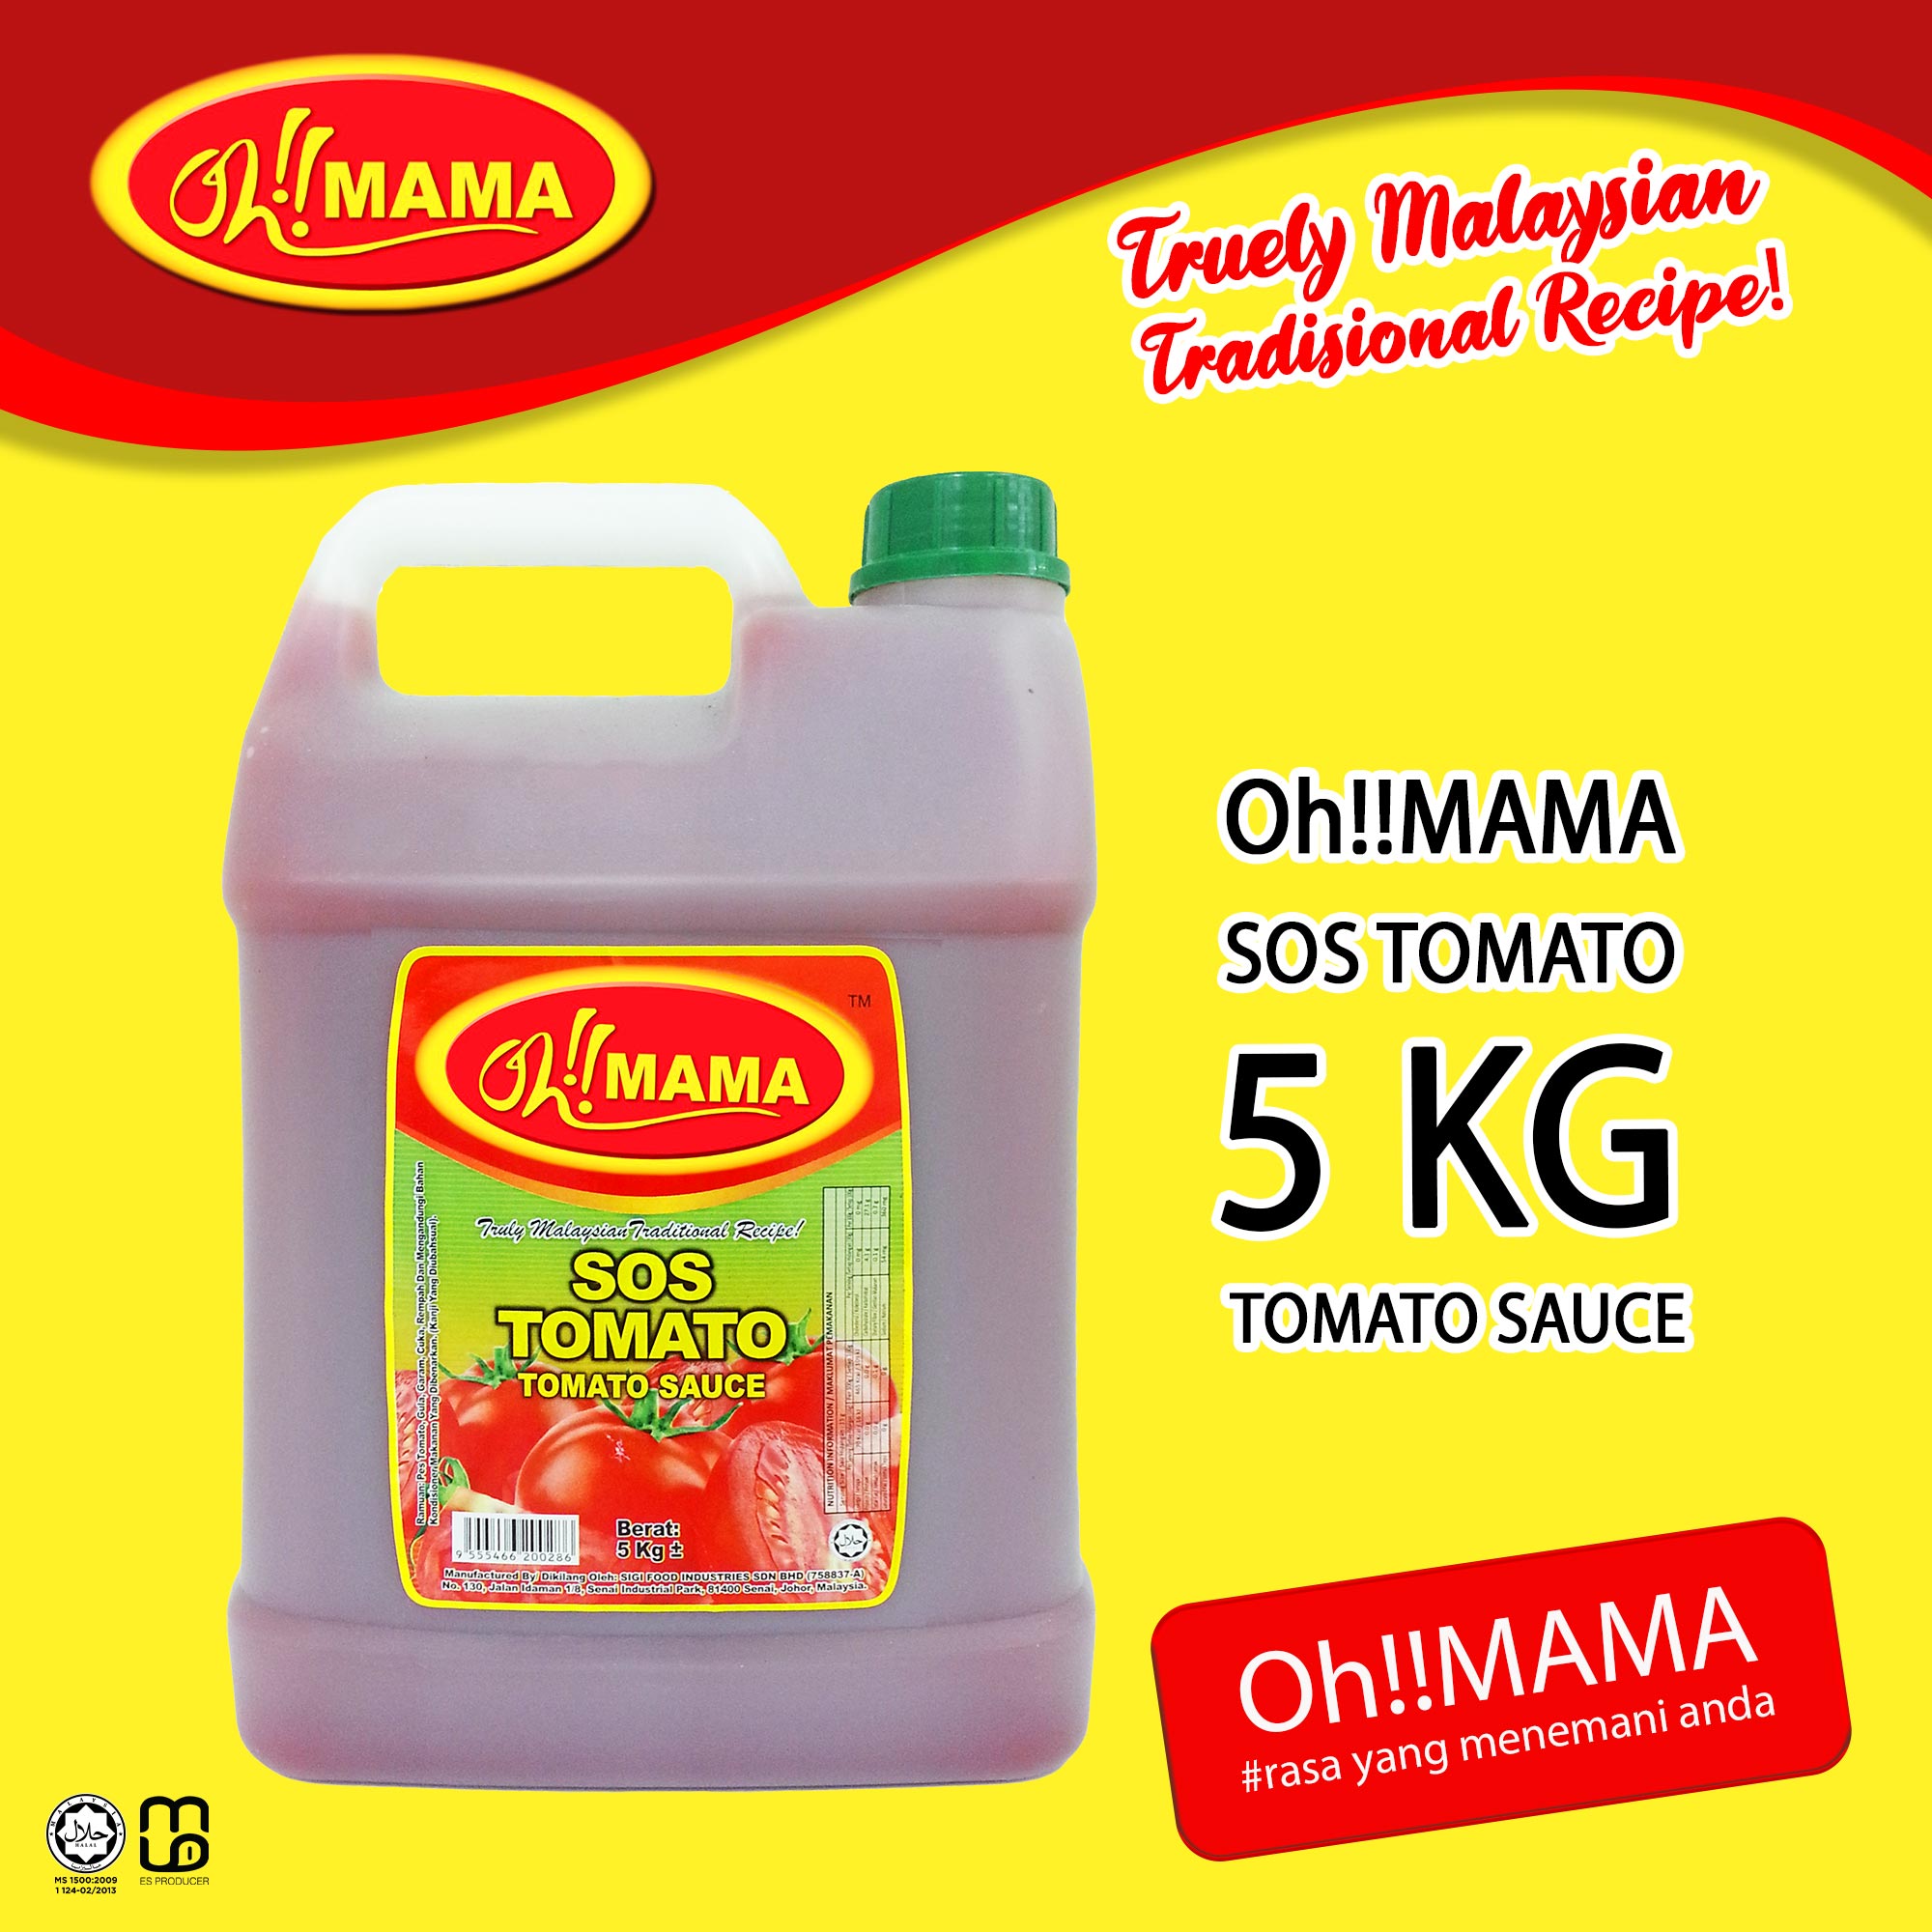 Oh!!MAMA Tomato Sauce 5kg